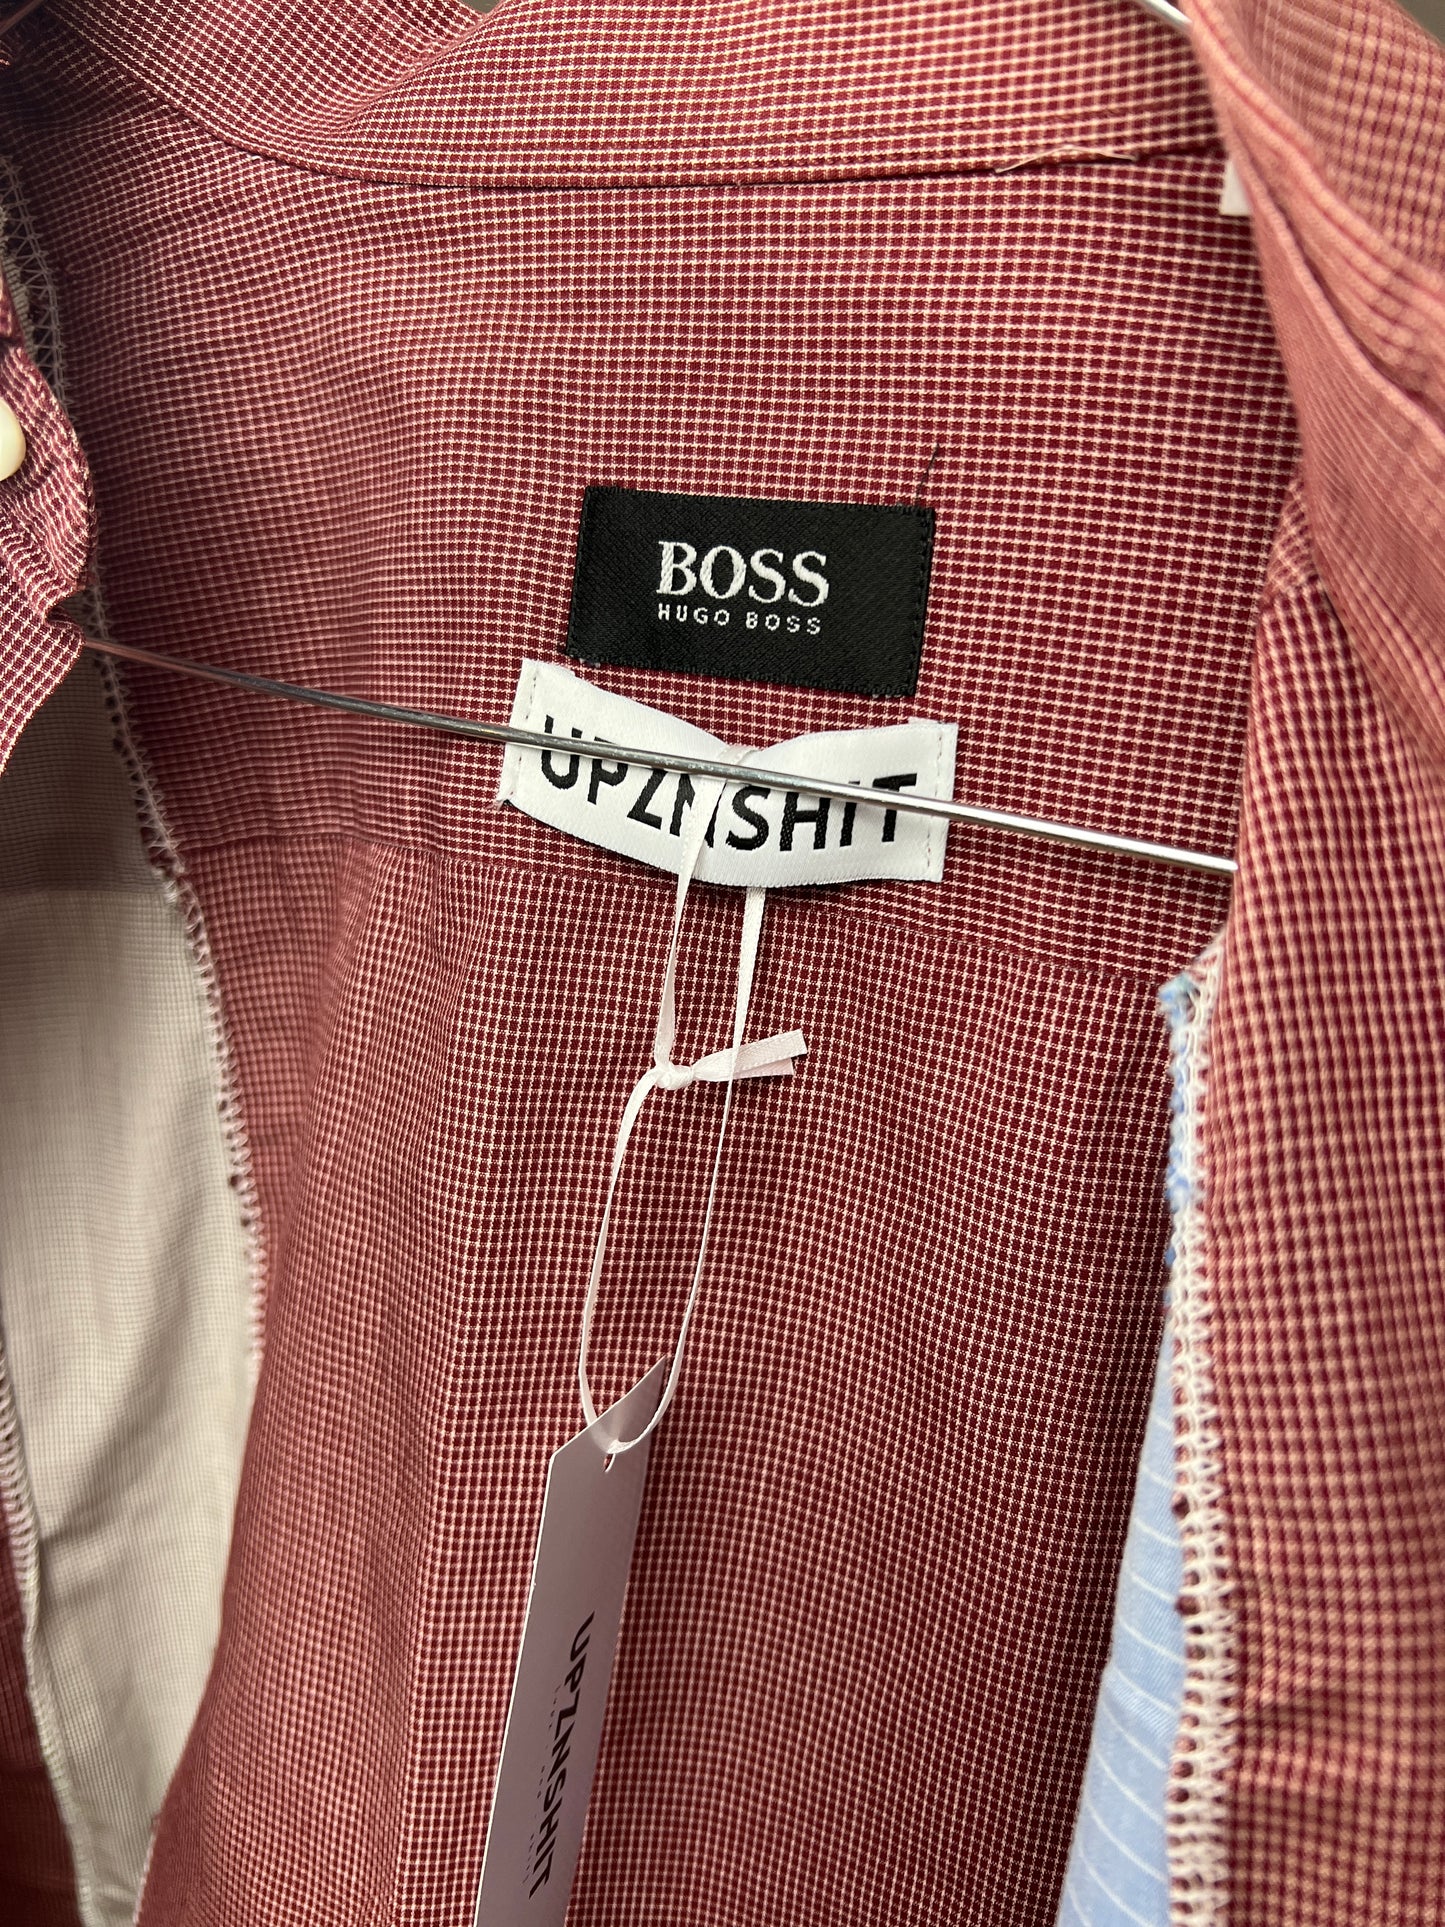 Blend Shirt Hugo Boss N°74